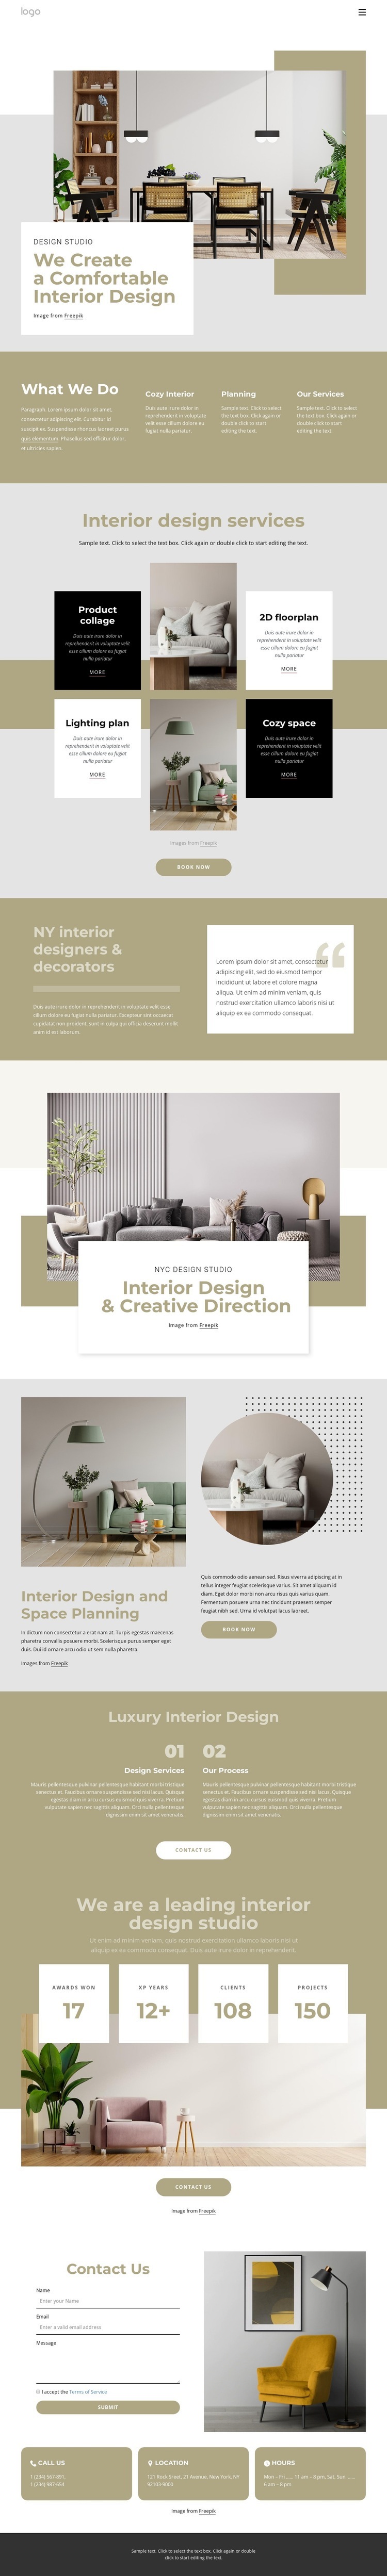 We create a comfortable interiors Squarespace Template Alternative